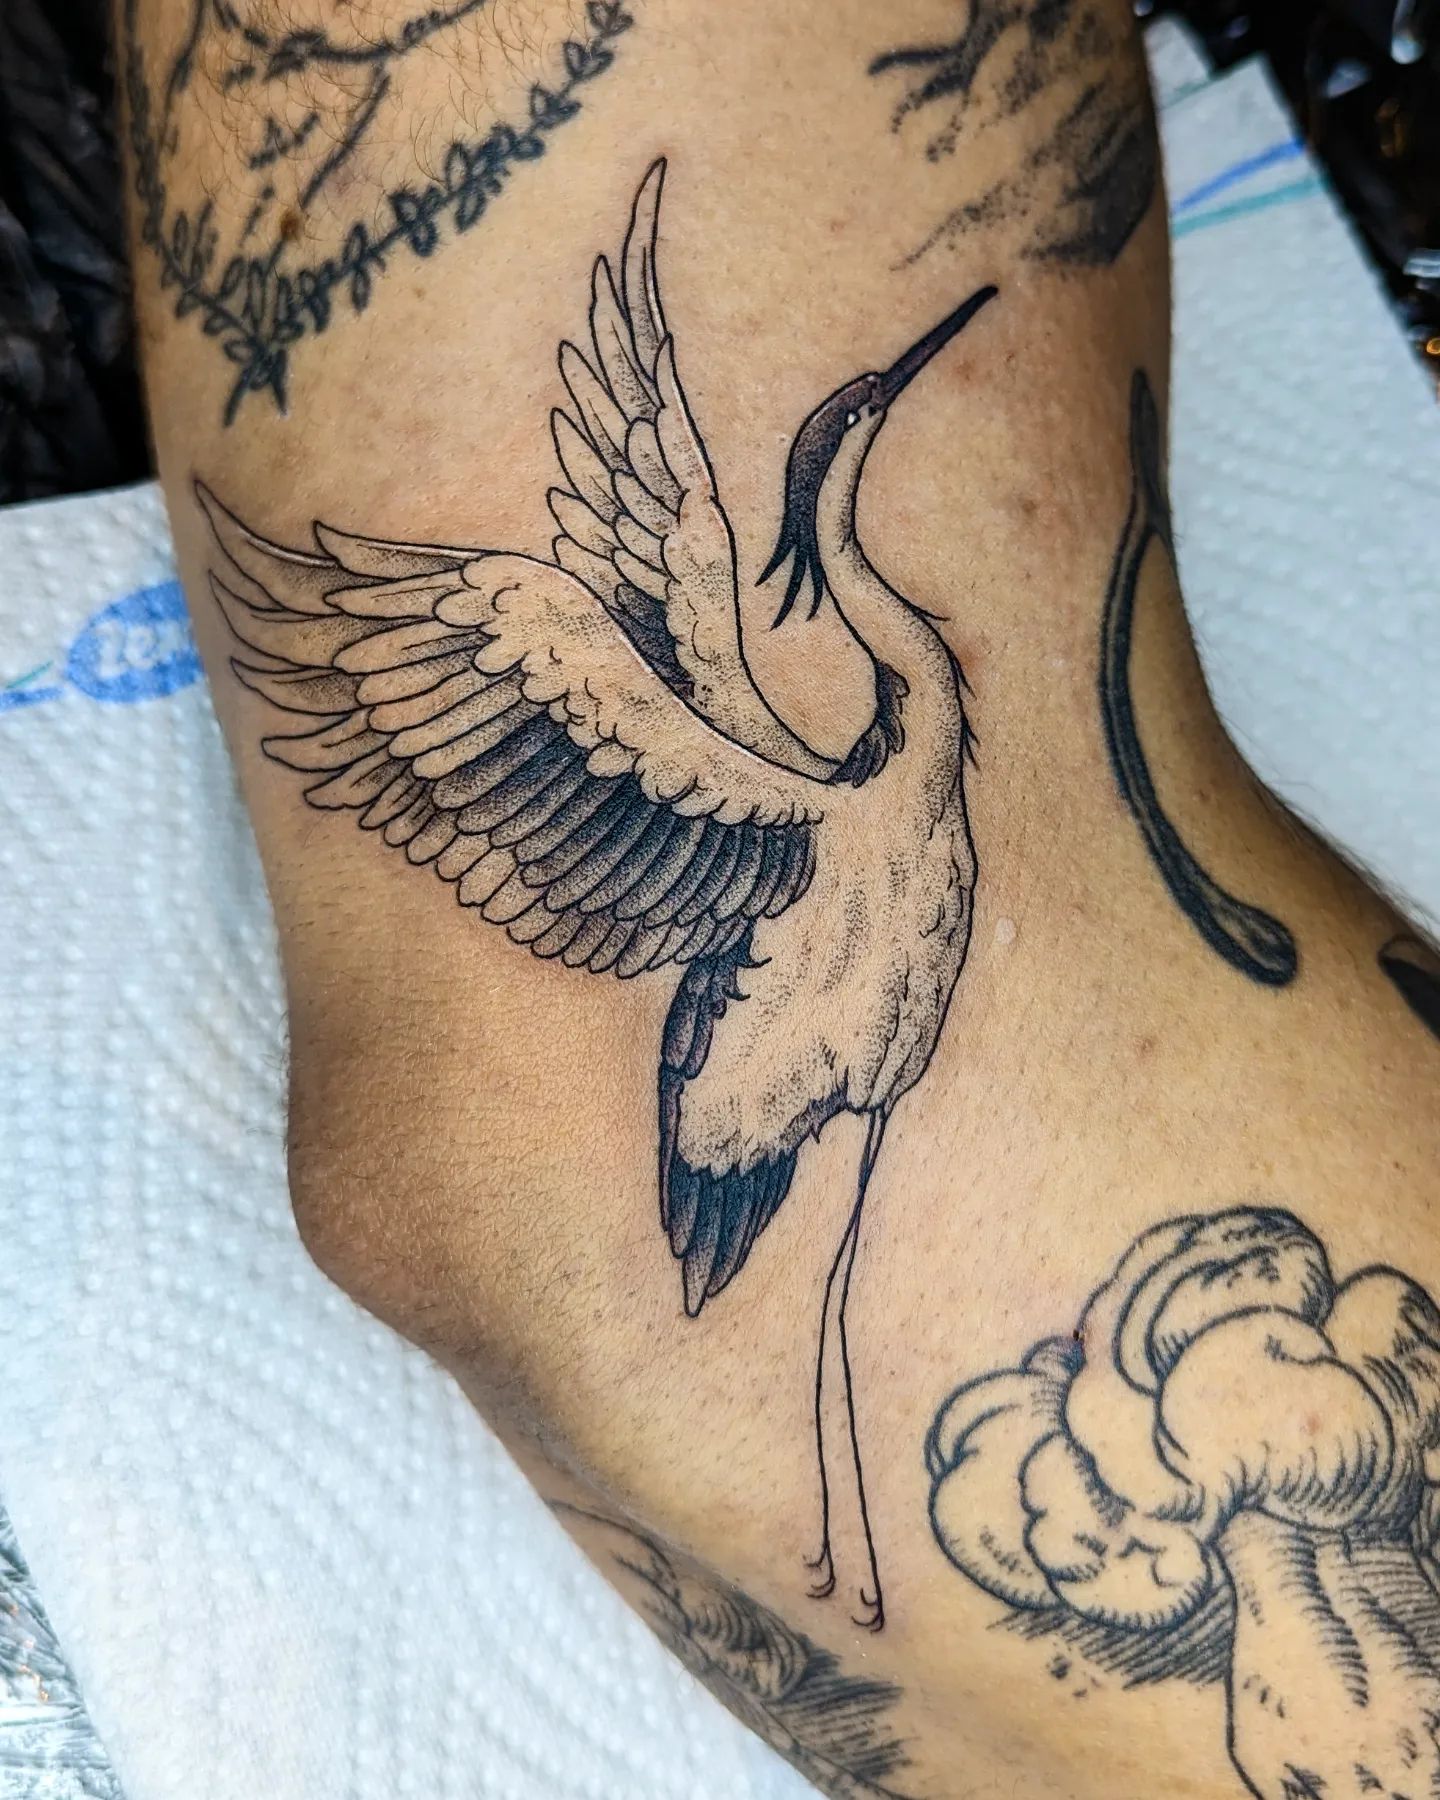 Crane filling an empty spot on @r.reider 's arm
.
#ink #inked #tattooartist #art